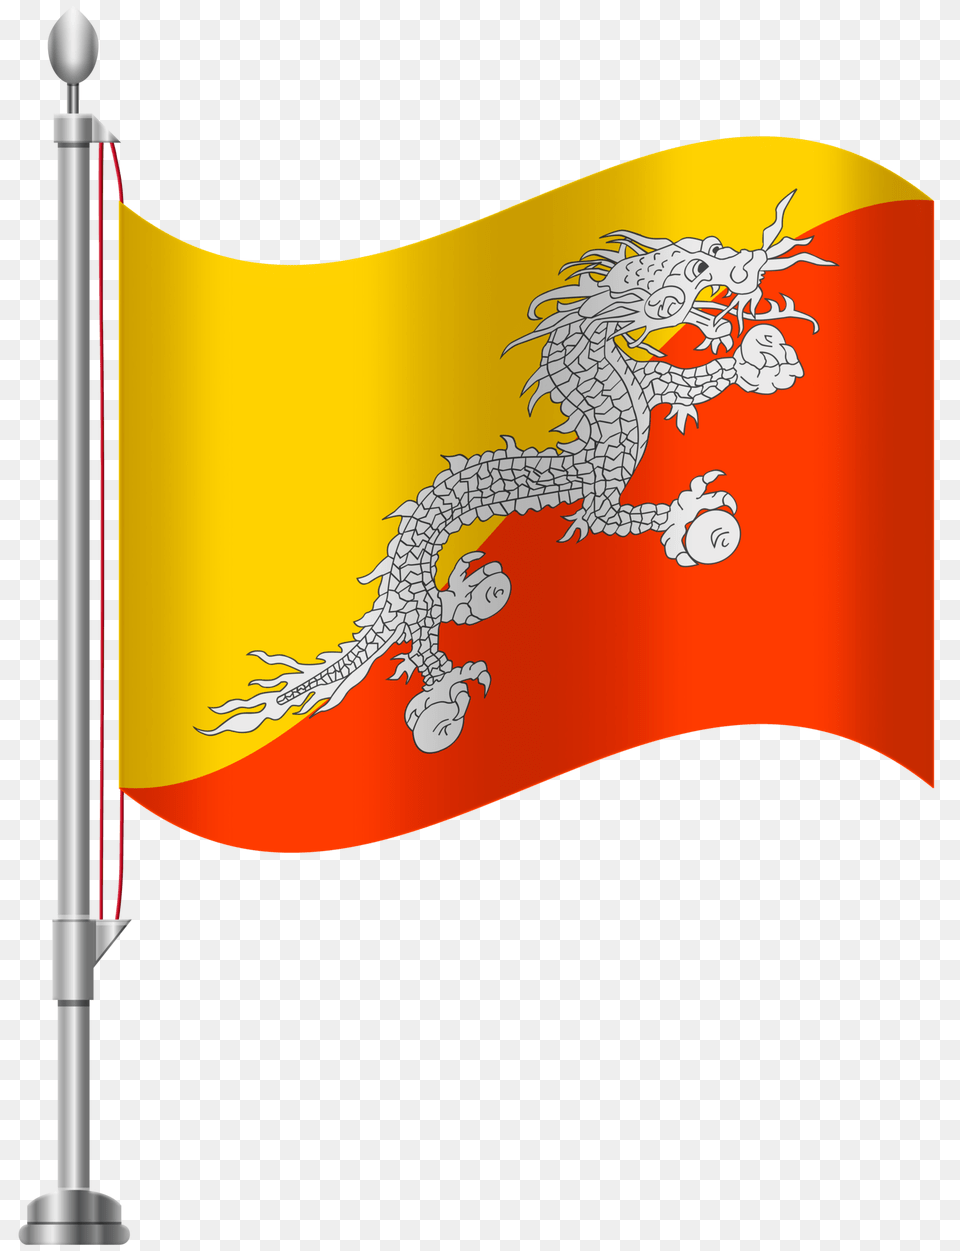 Bhutan Flag Clip Art, Smoke Pipe Png Image